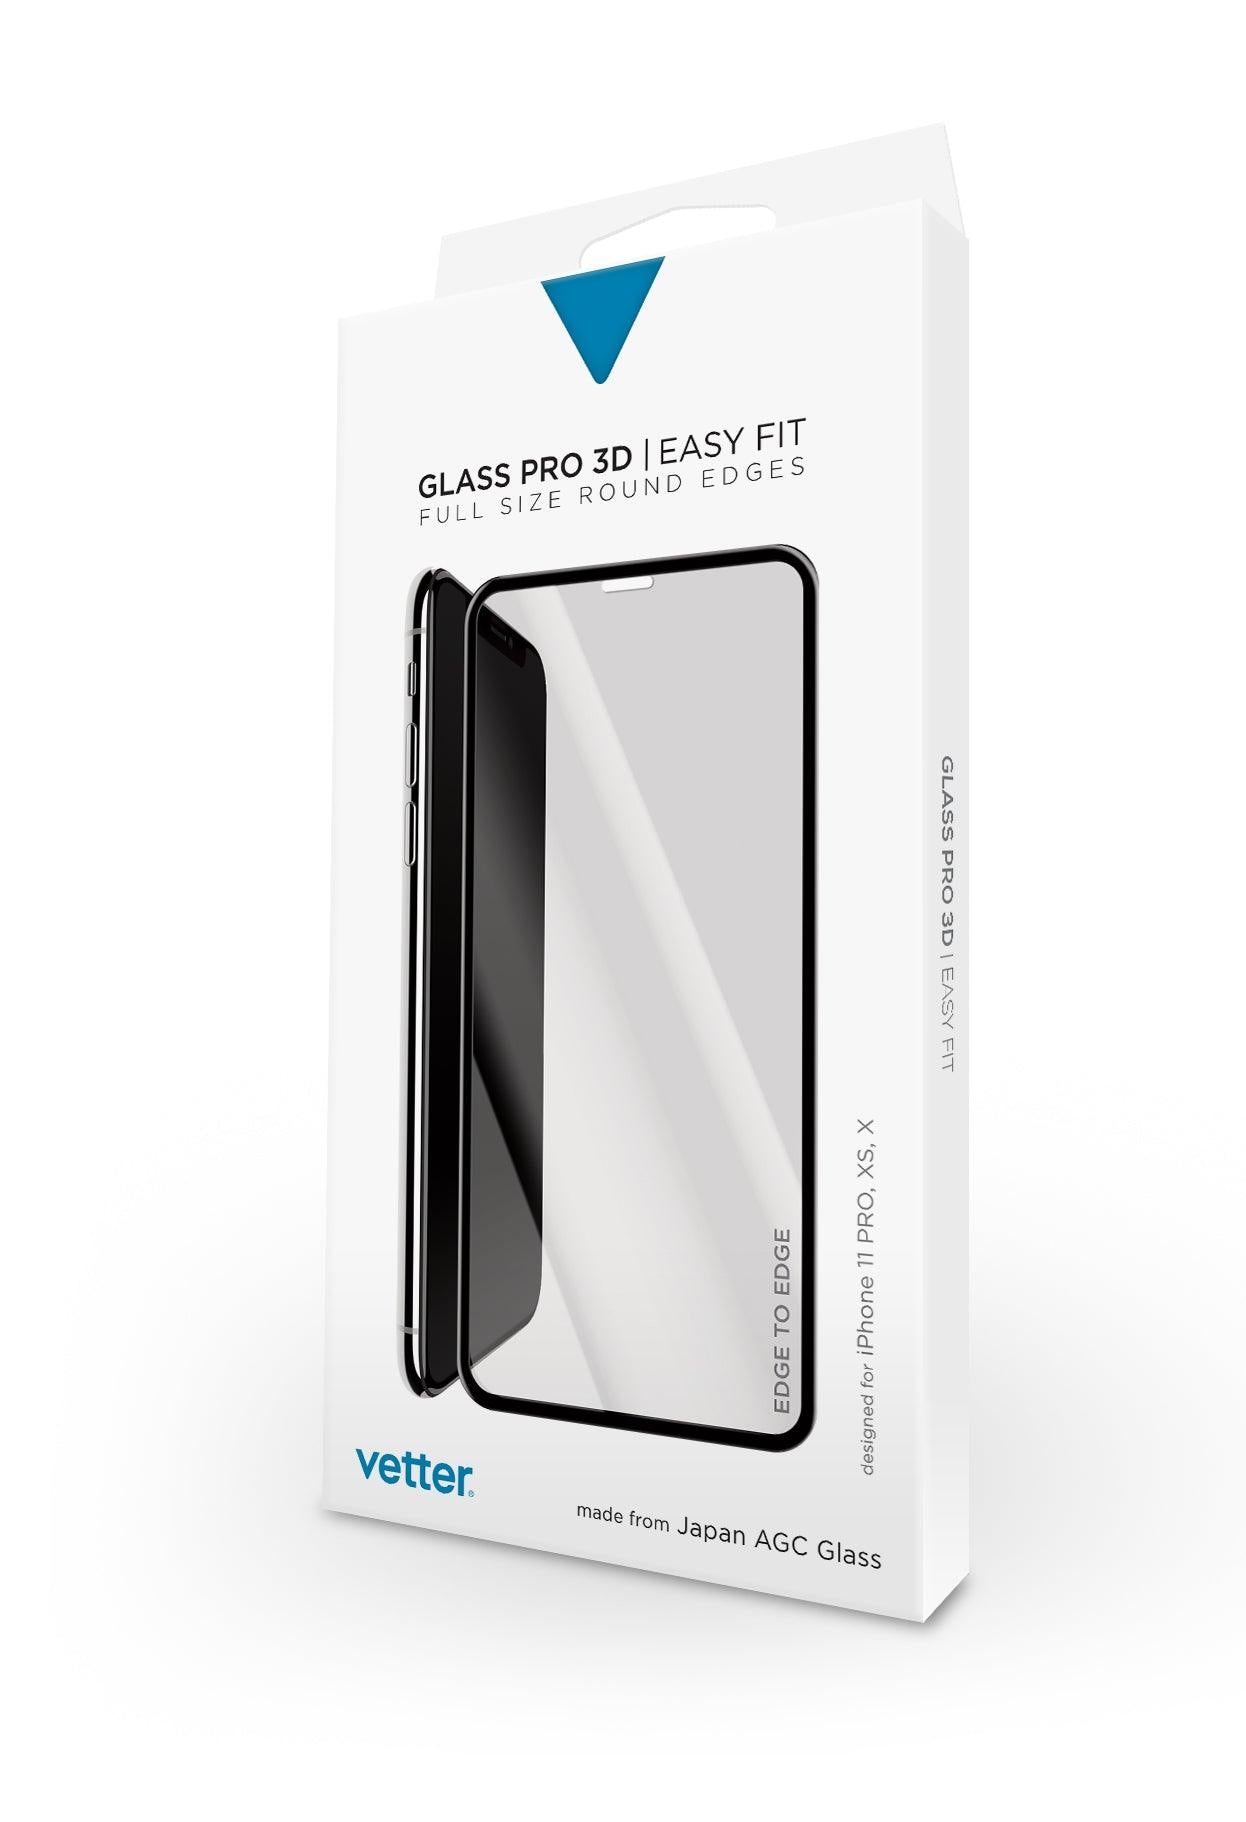 Folie Protectie Ecran iPhone 11 Pro, 3D Tempered Glass Easy Fit, Negru - vetter.ro